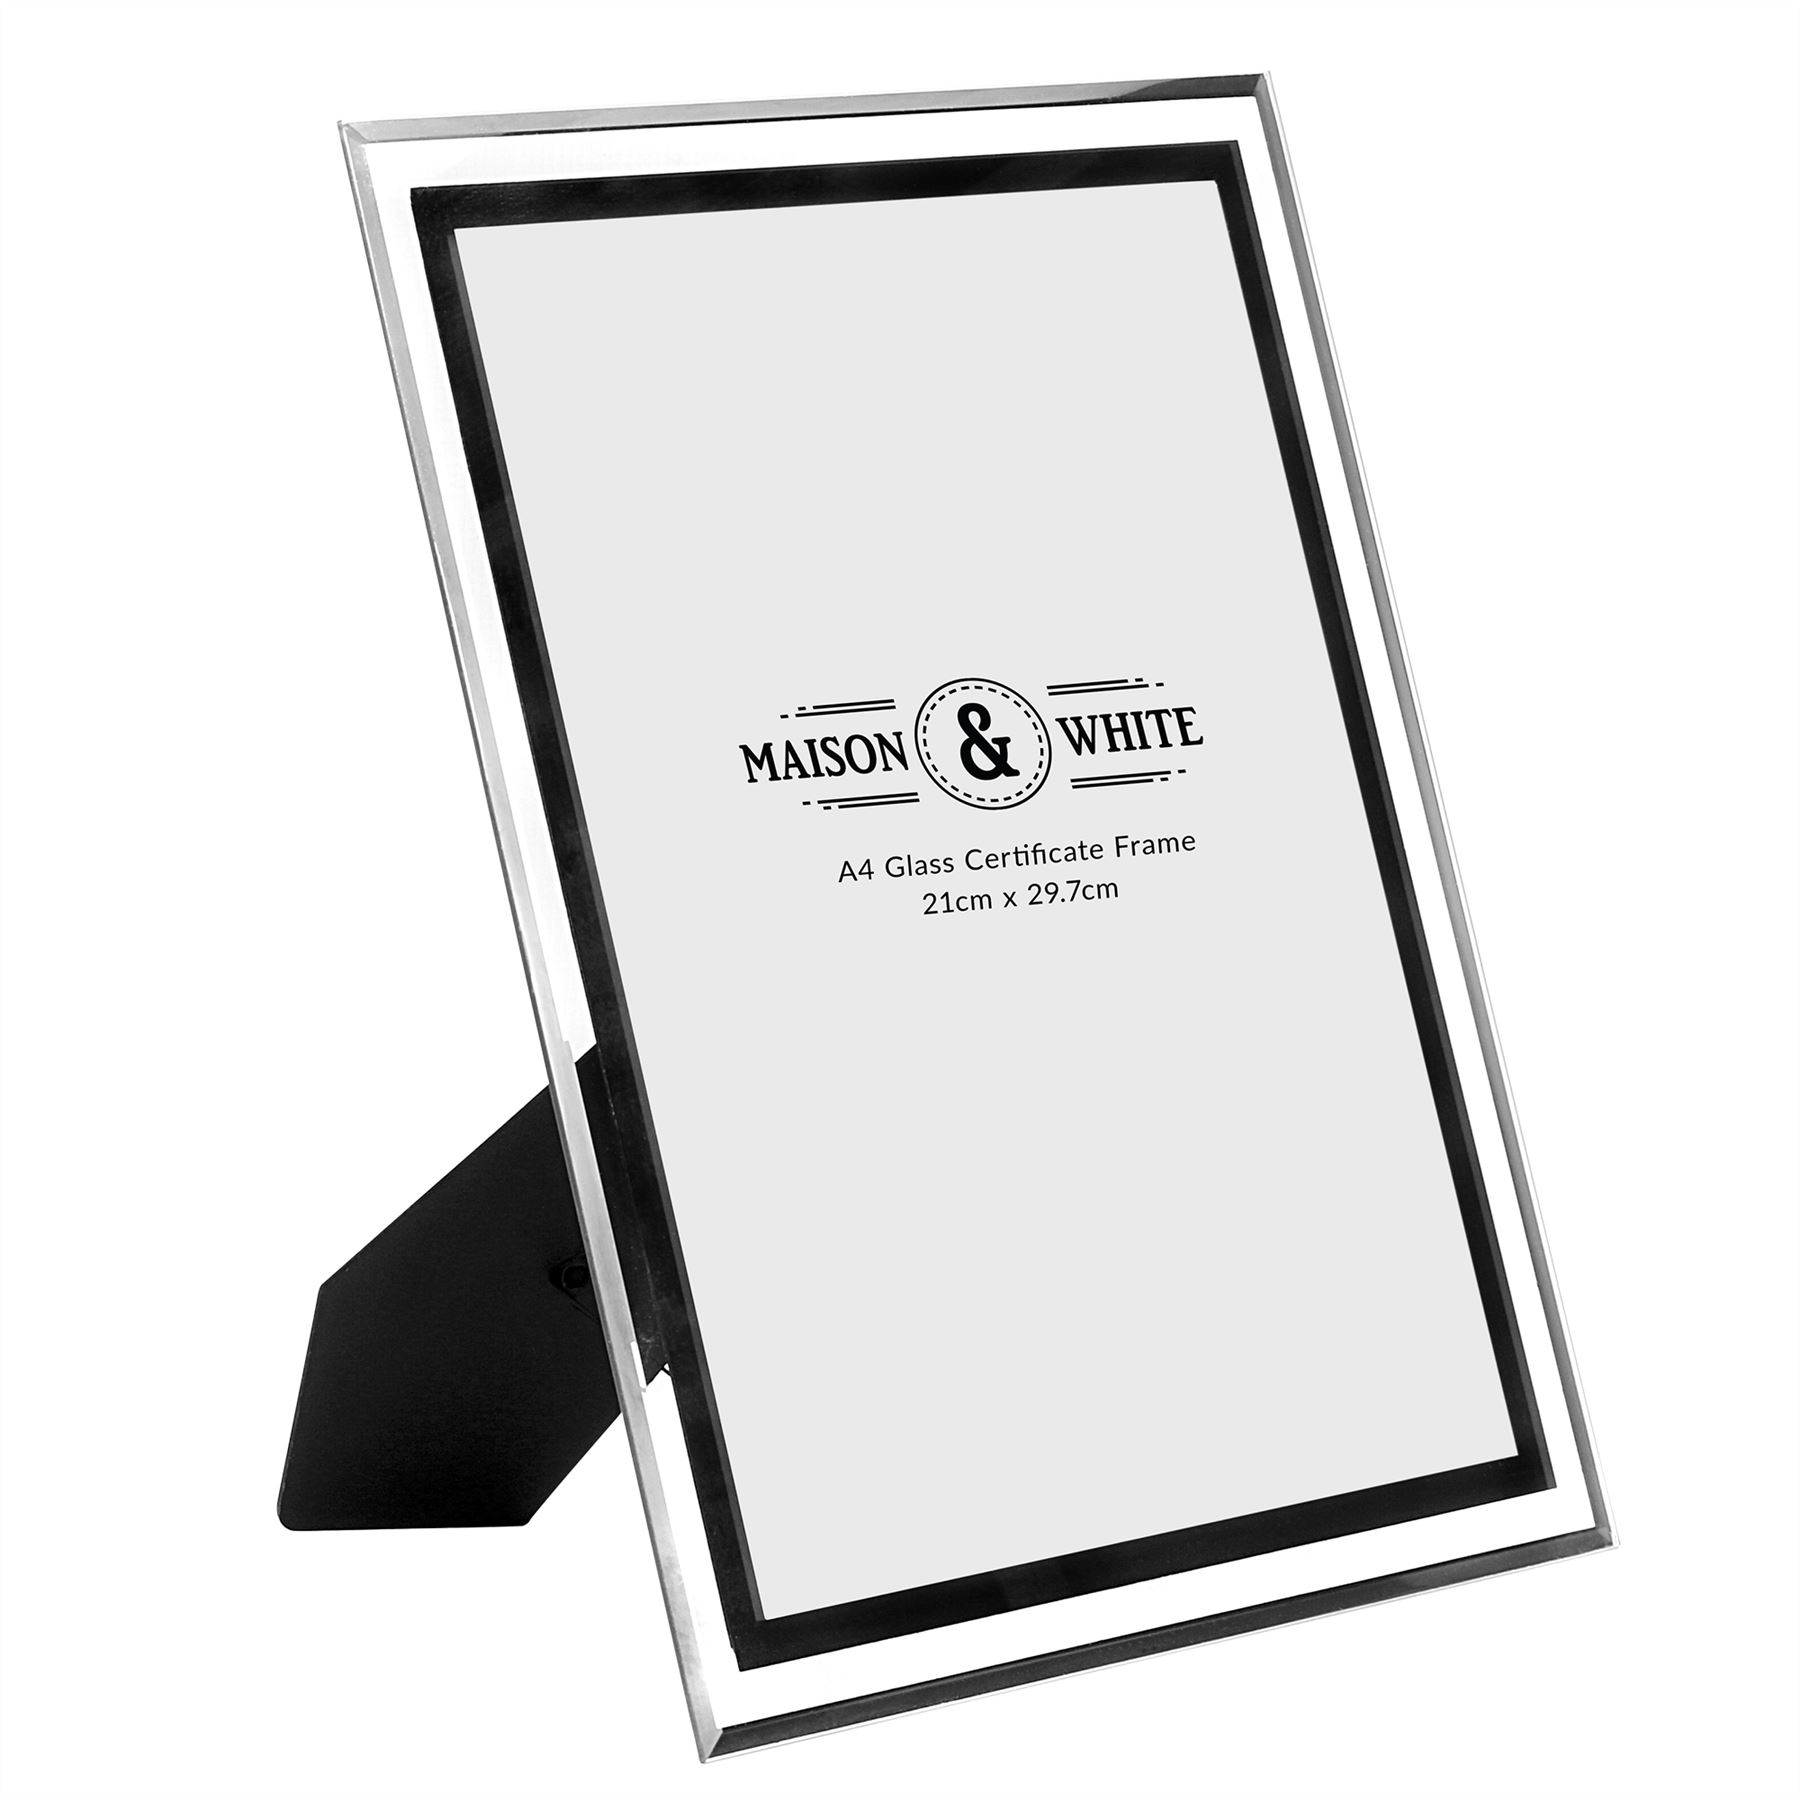 A4 Photo Certificate Mirrored Glass Frame | M&W